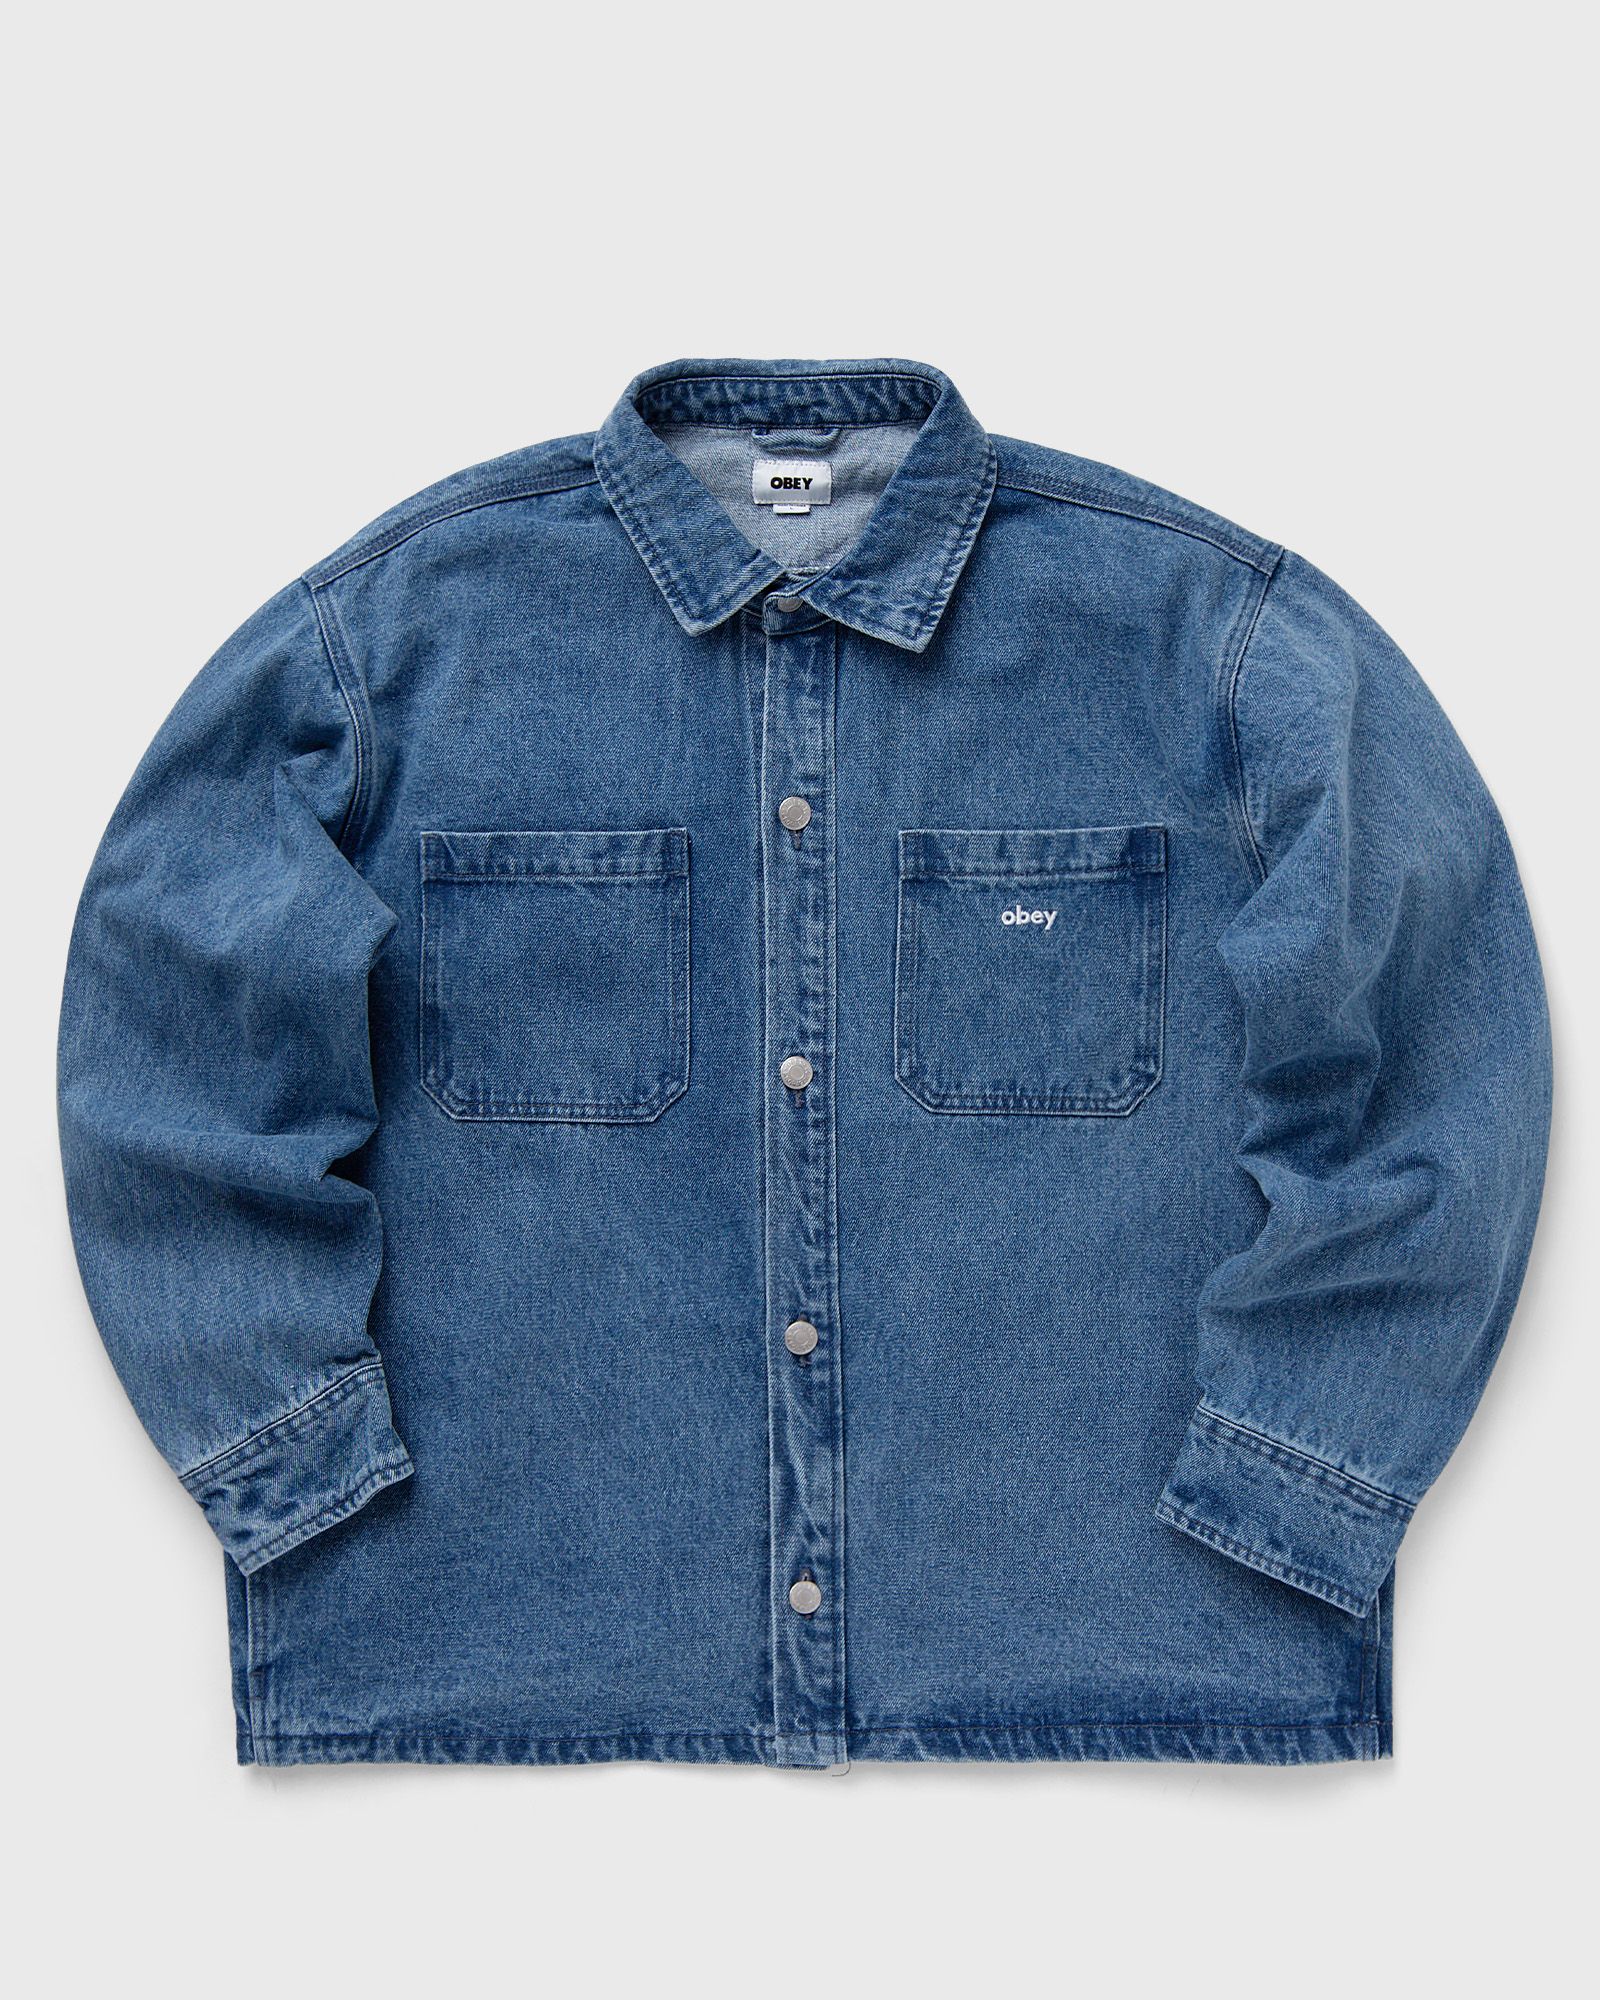 Obey - winston shirt jacket men denim jackets blue in größe:xl